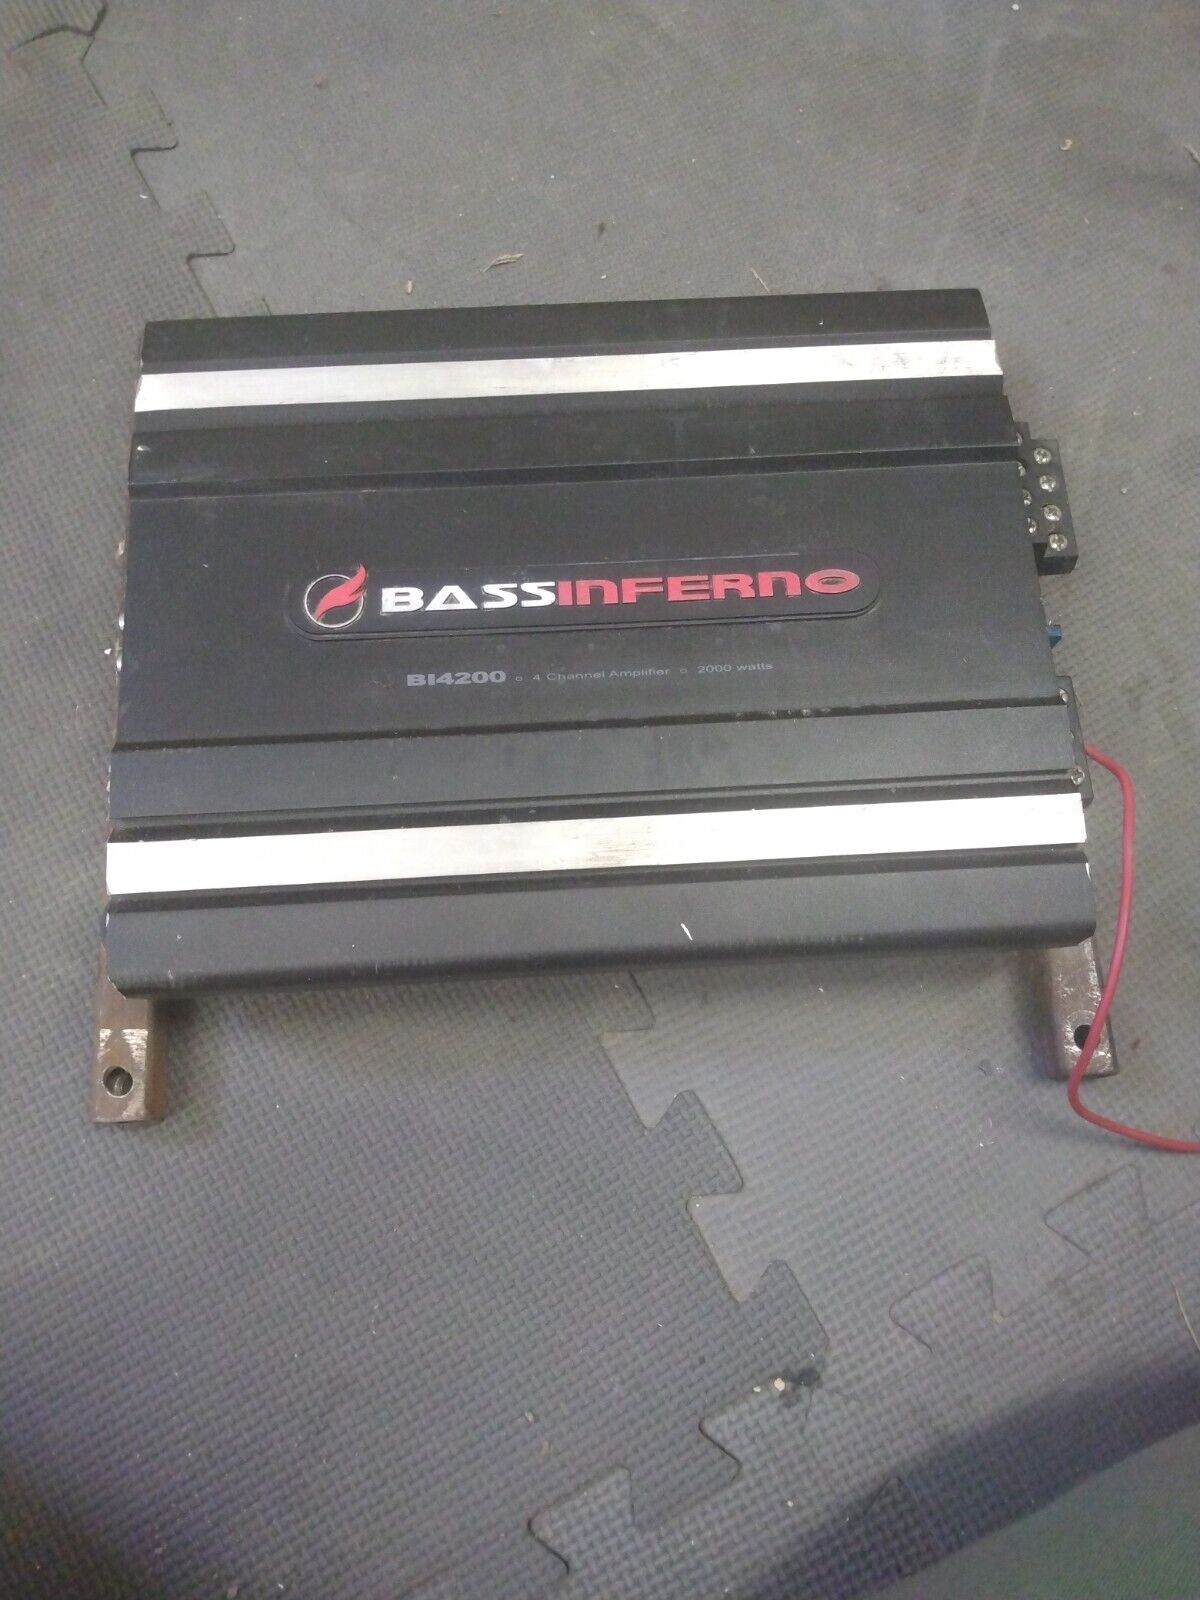 bass inferno 2000 watt 4 channel amplifier